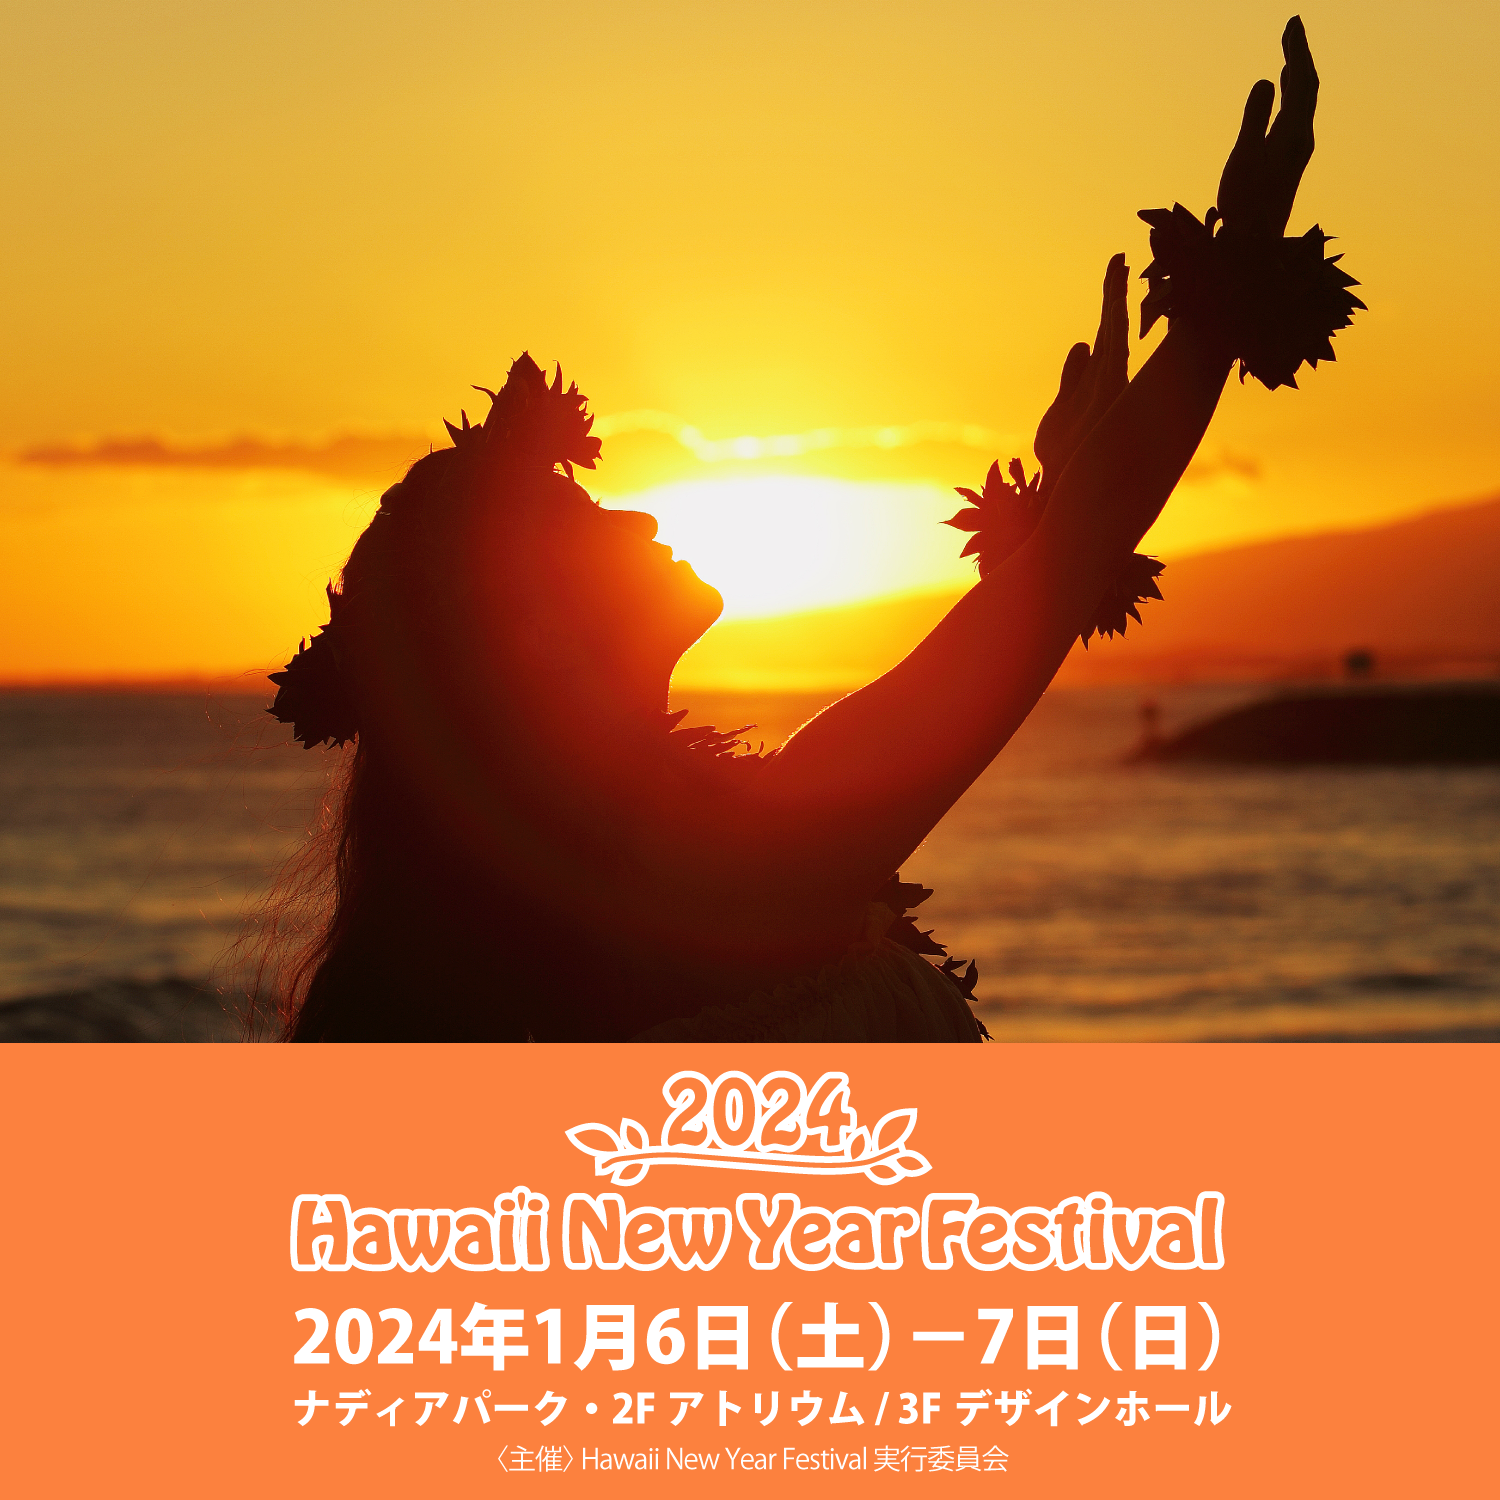 Hawaii New Year Festival 2024